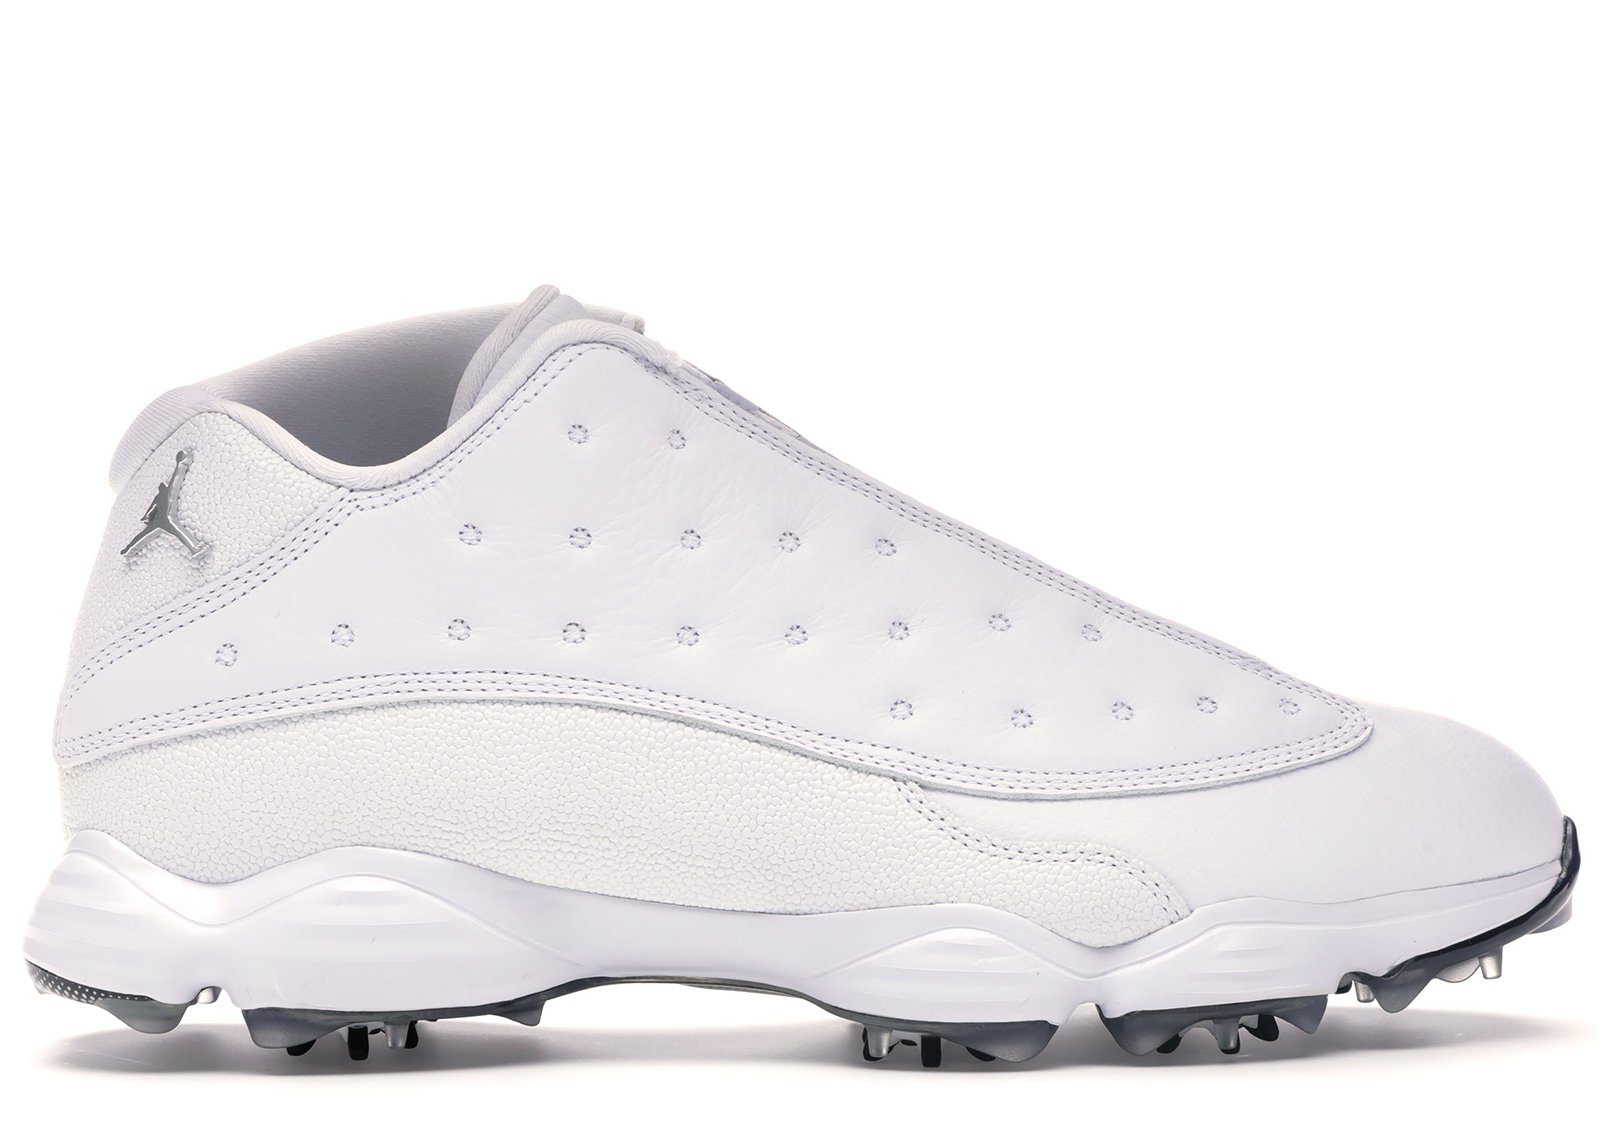 Jordan 13 Retro Golf Cleat White Black sneakers